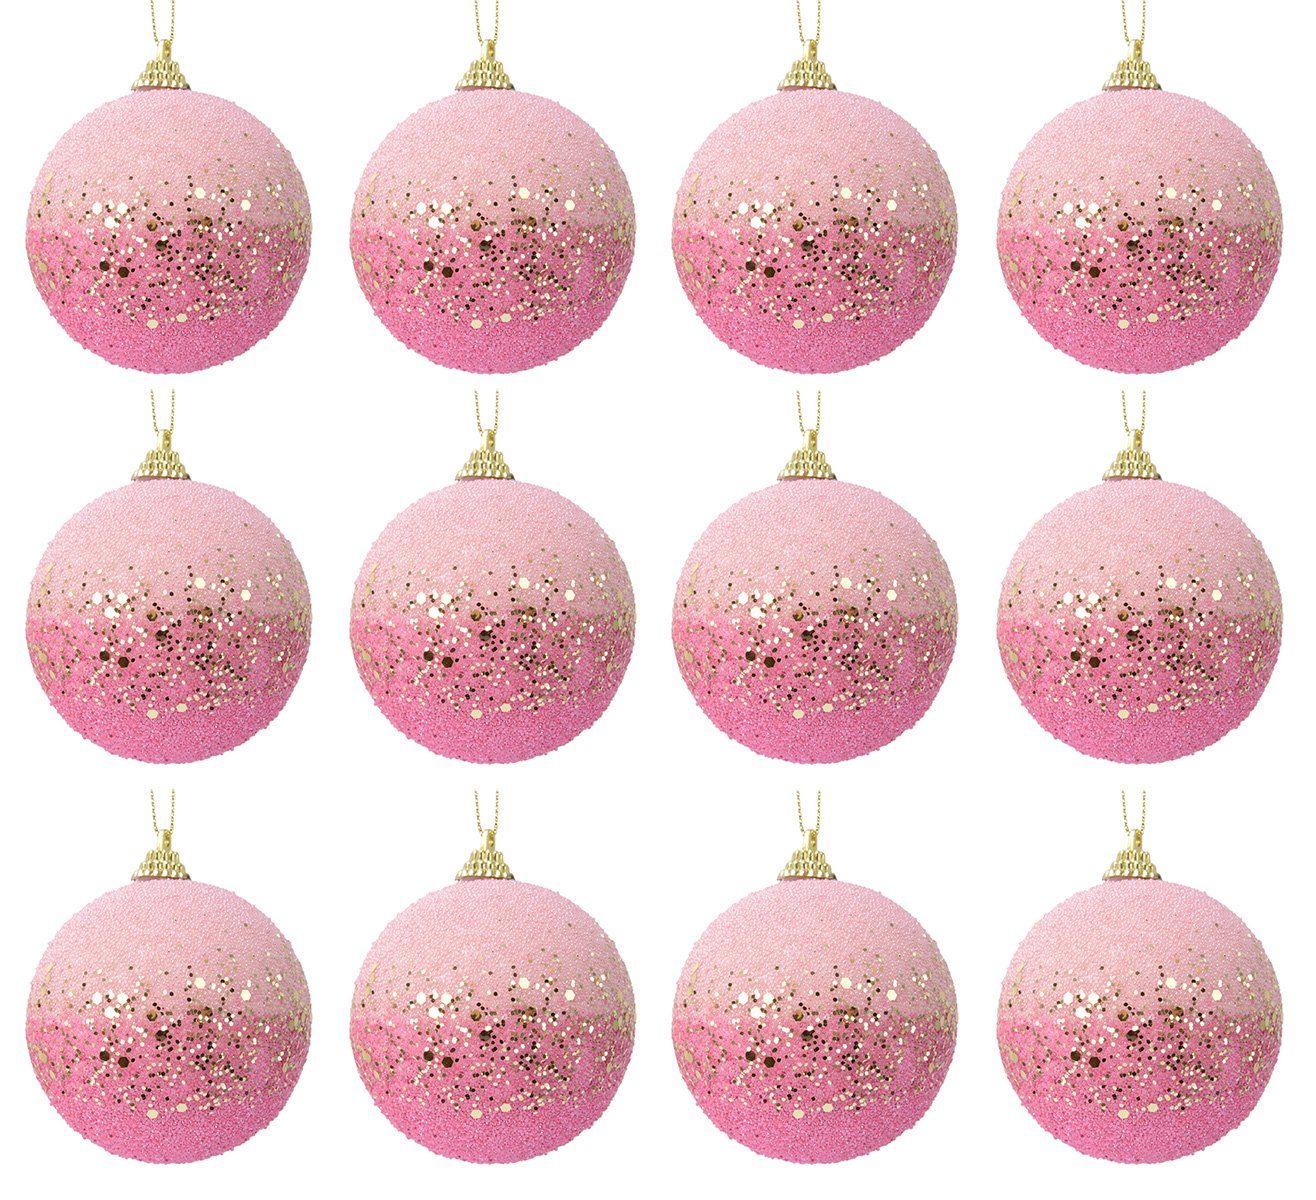 Decoris season decorations Christbaumschmuck, Weihnachtskugeln Kunststoff  8cm Perlen Pailletten 12er Set - Rosa